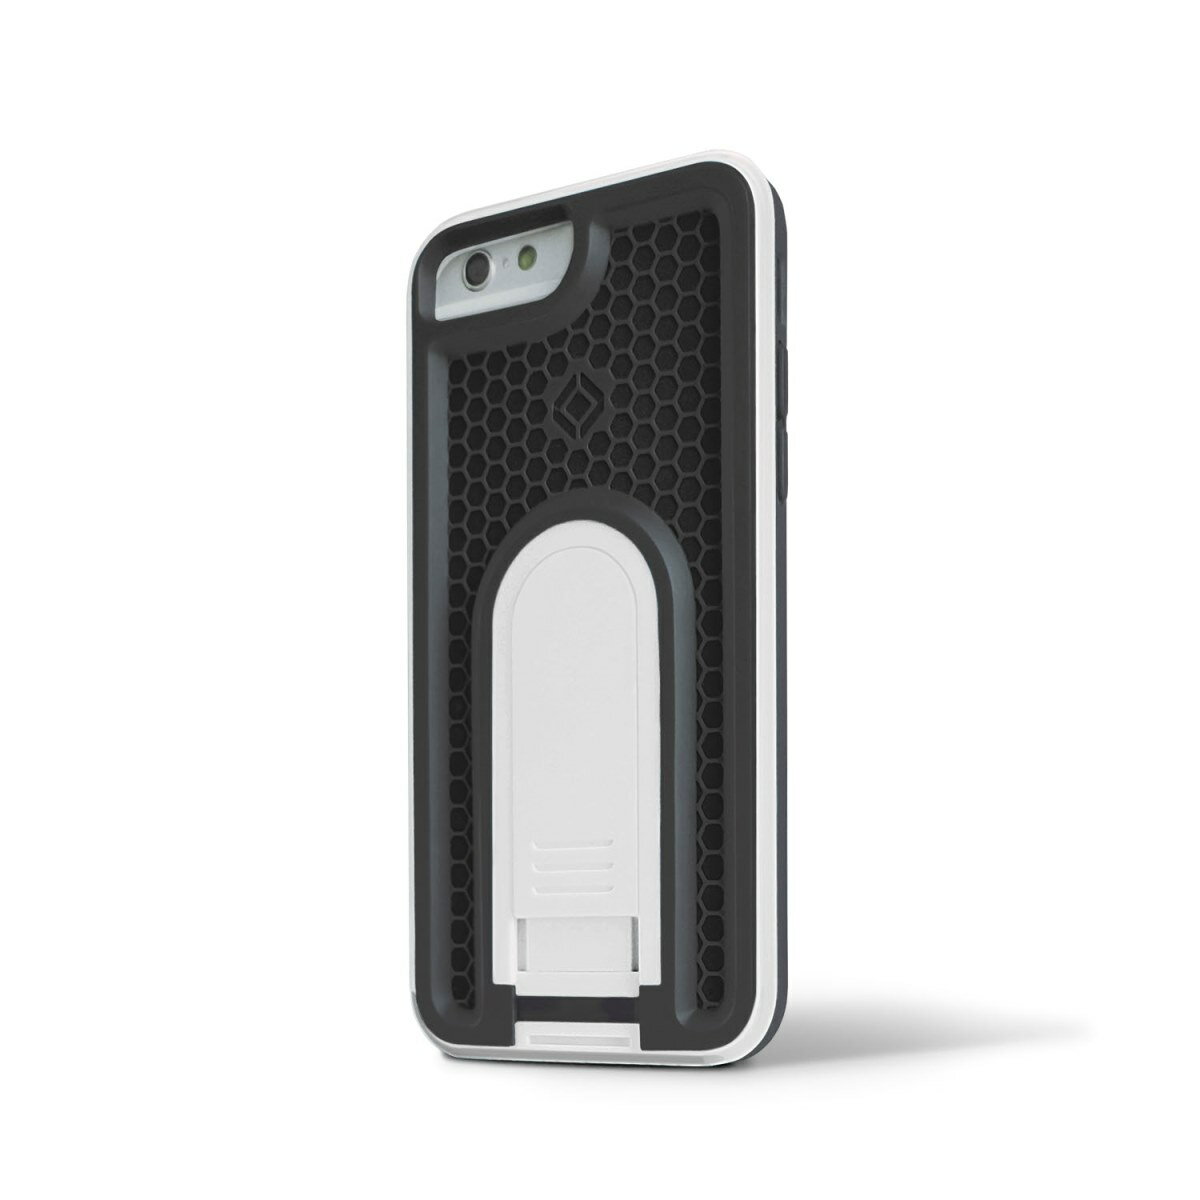 Intuitive Cube X-Guard iPhone6/6s用ケース （ホワイト）[LG-MA08-3118]|| ハードケース カバー アイフォン6 白 iPhone6s おしゃれ 海外ブランド おもしろ 【newyear_d19】